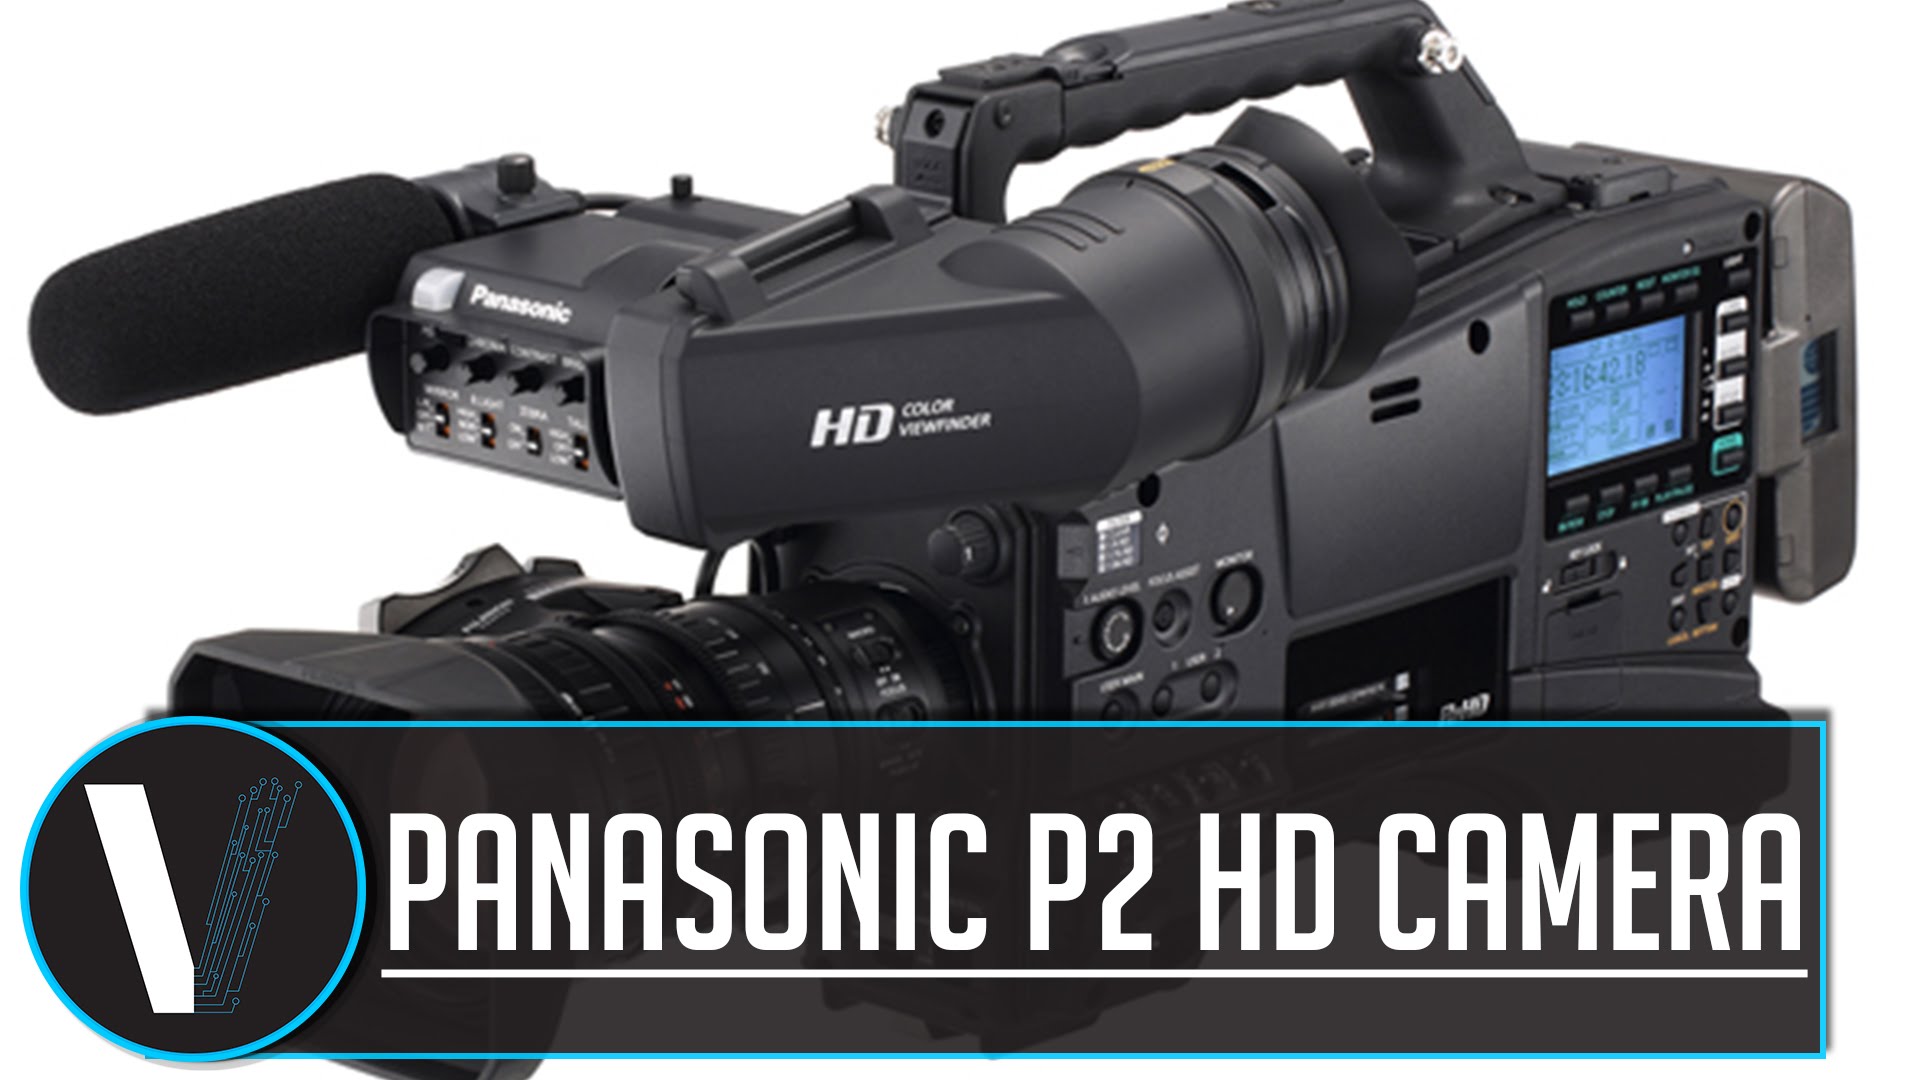 Panasonic P2 HD Camera review